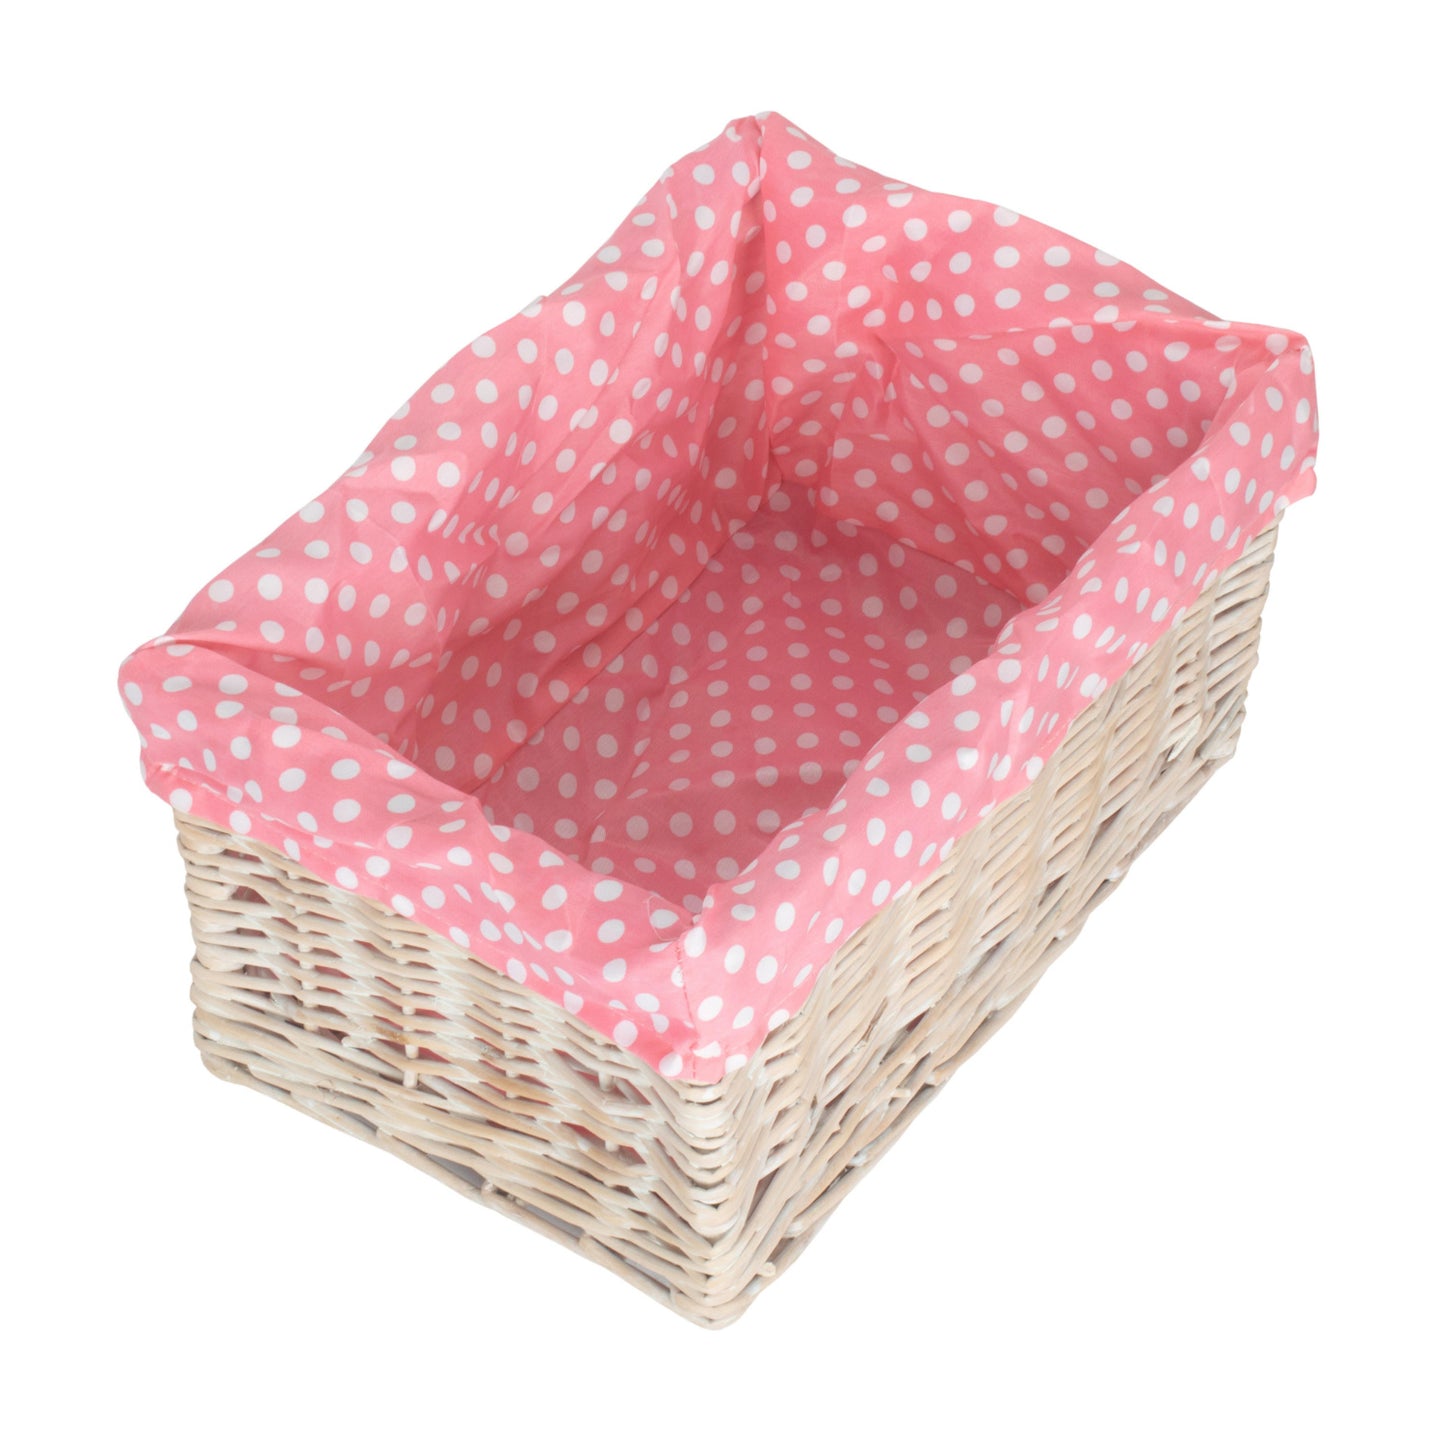 Medium White Wash Storage Basket With Pink Spotty Lining